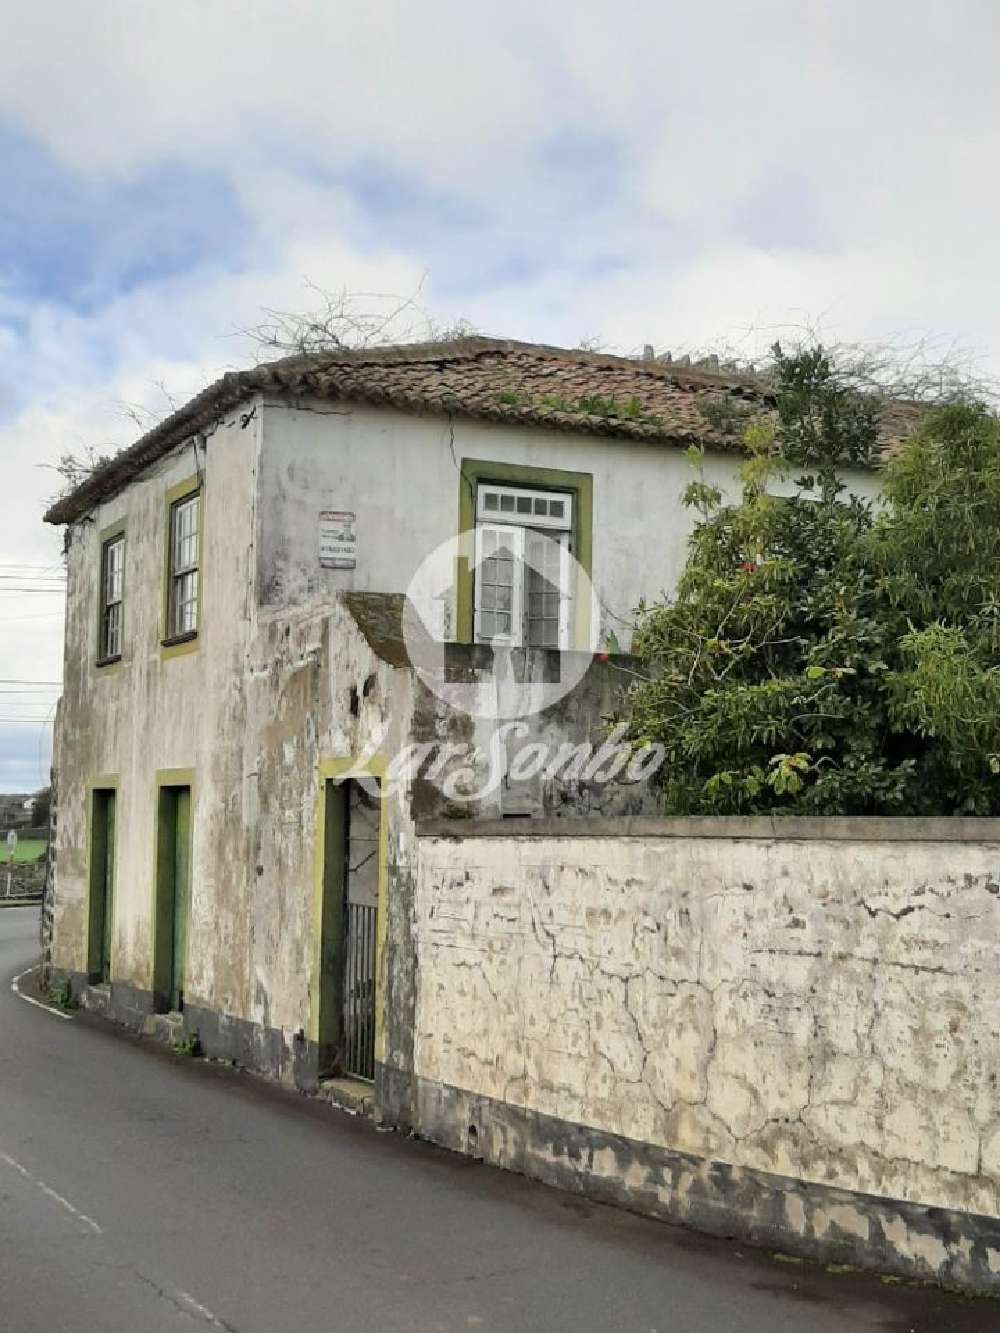  köpa hus  Calheta  Calheta (Madeira) 2